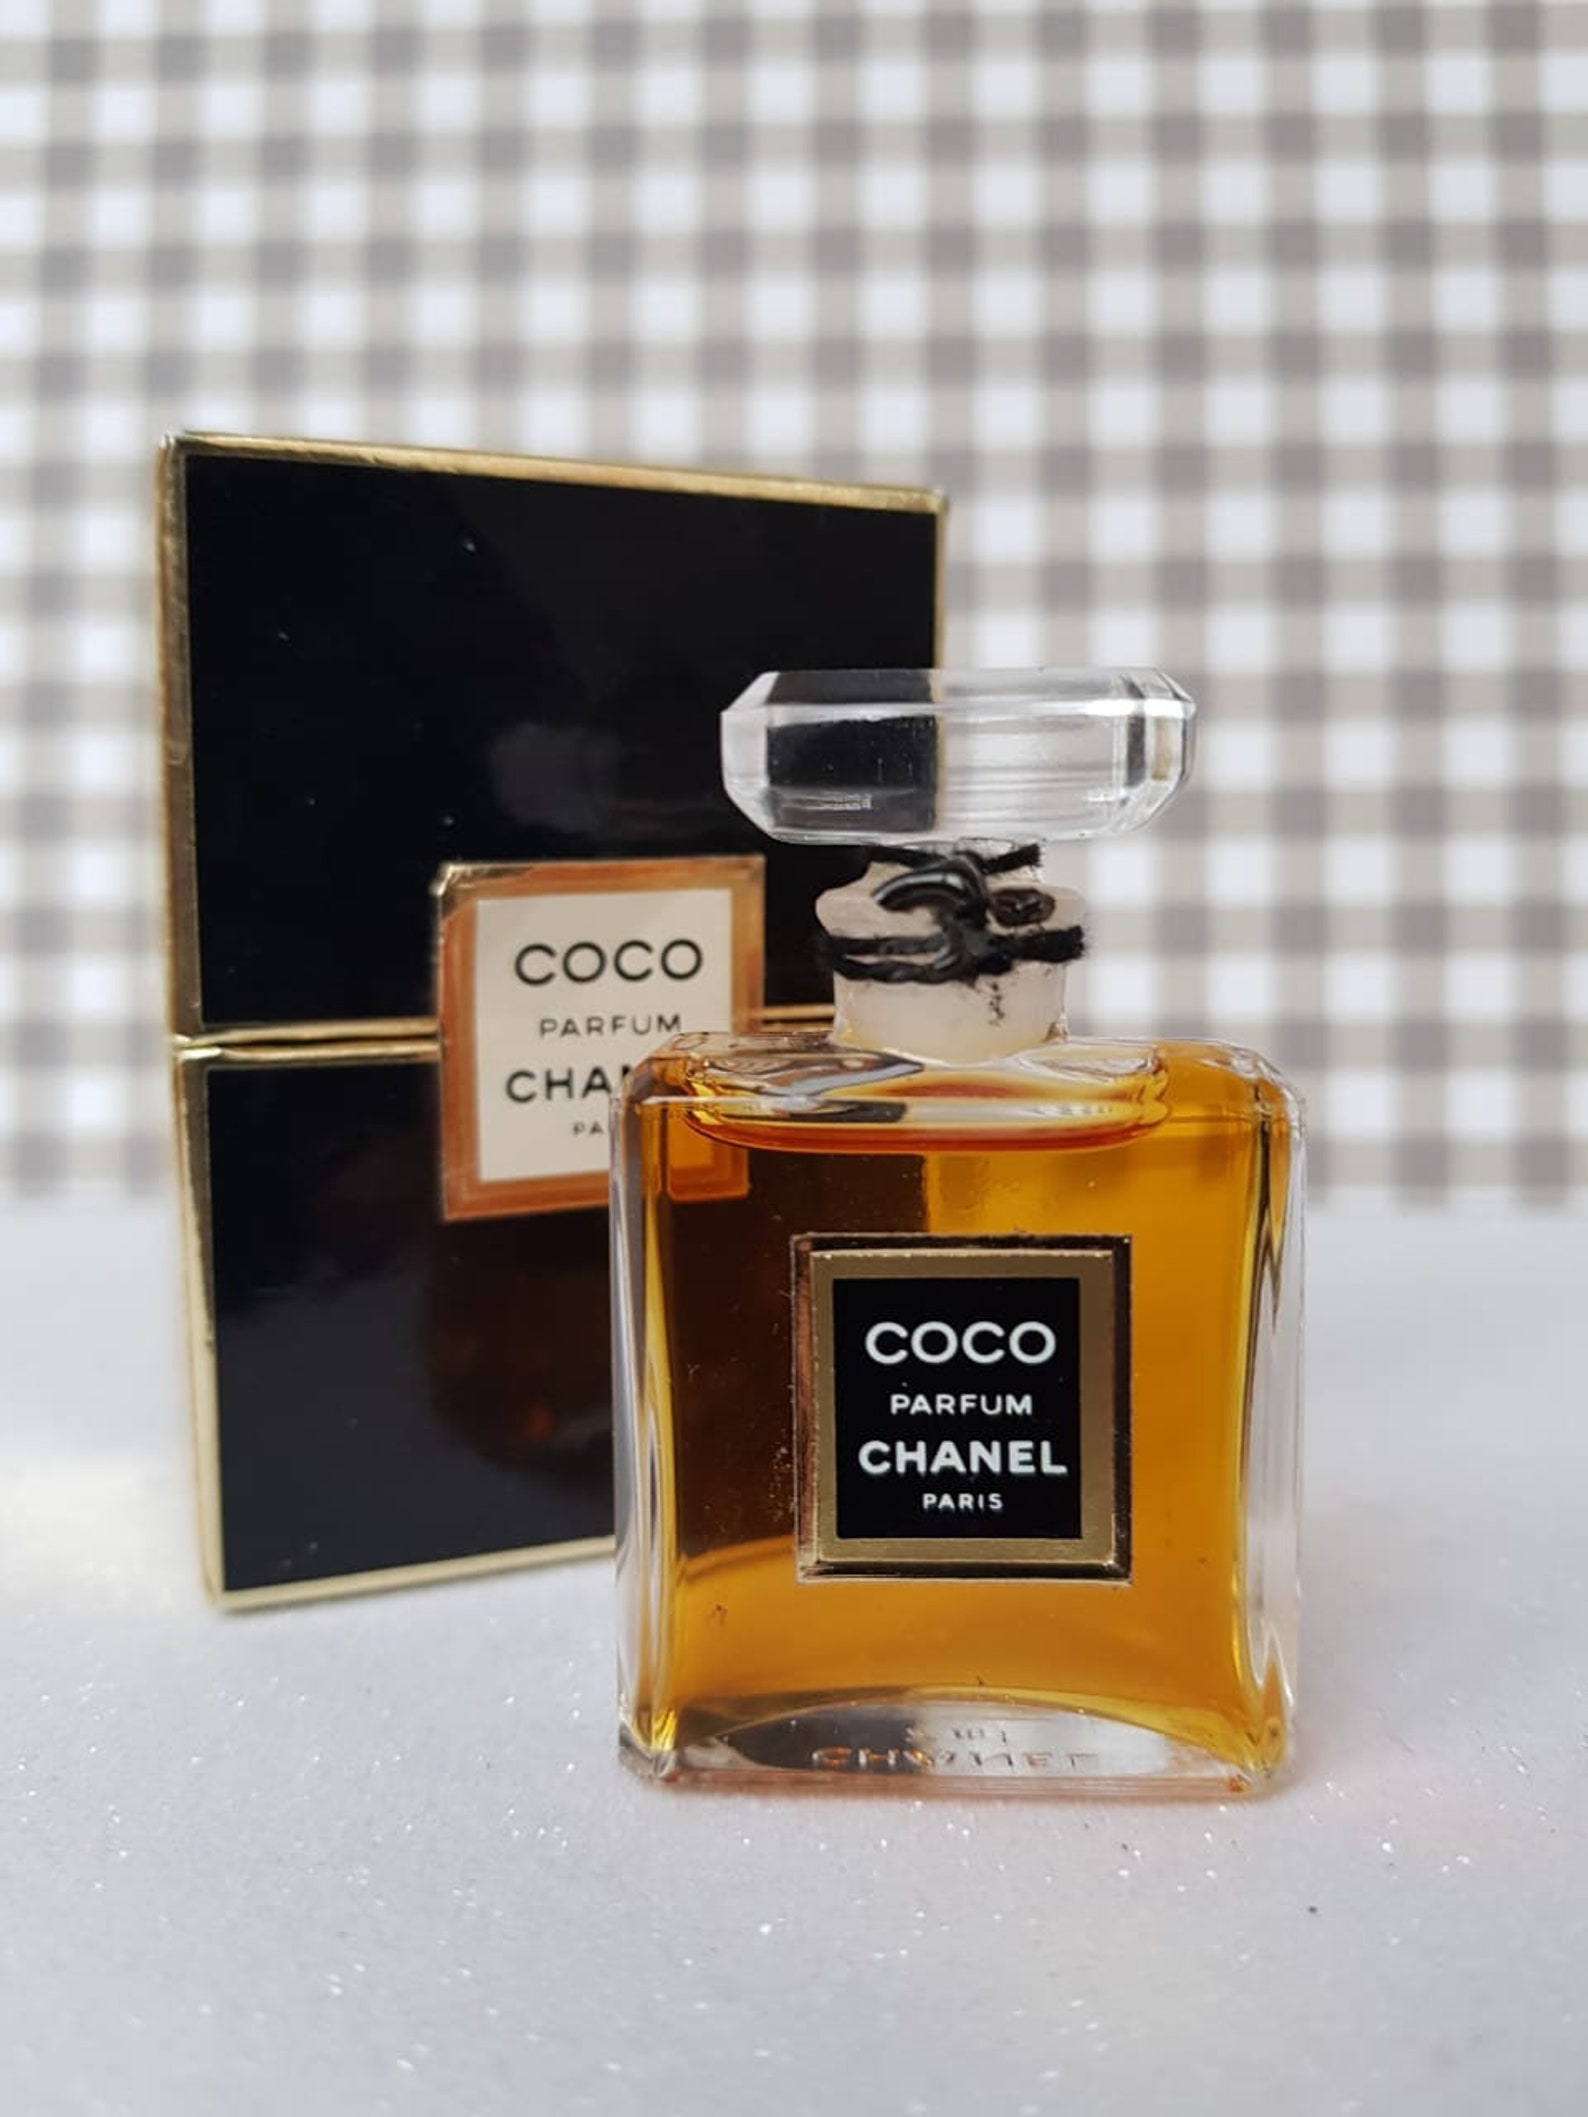 COCO Chanel 7.5 ml. Perfume Vintage | Etsy